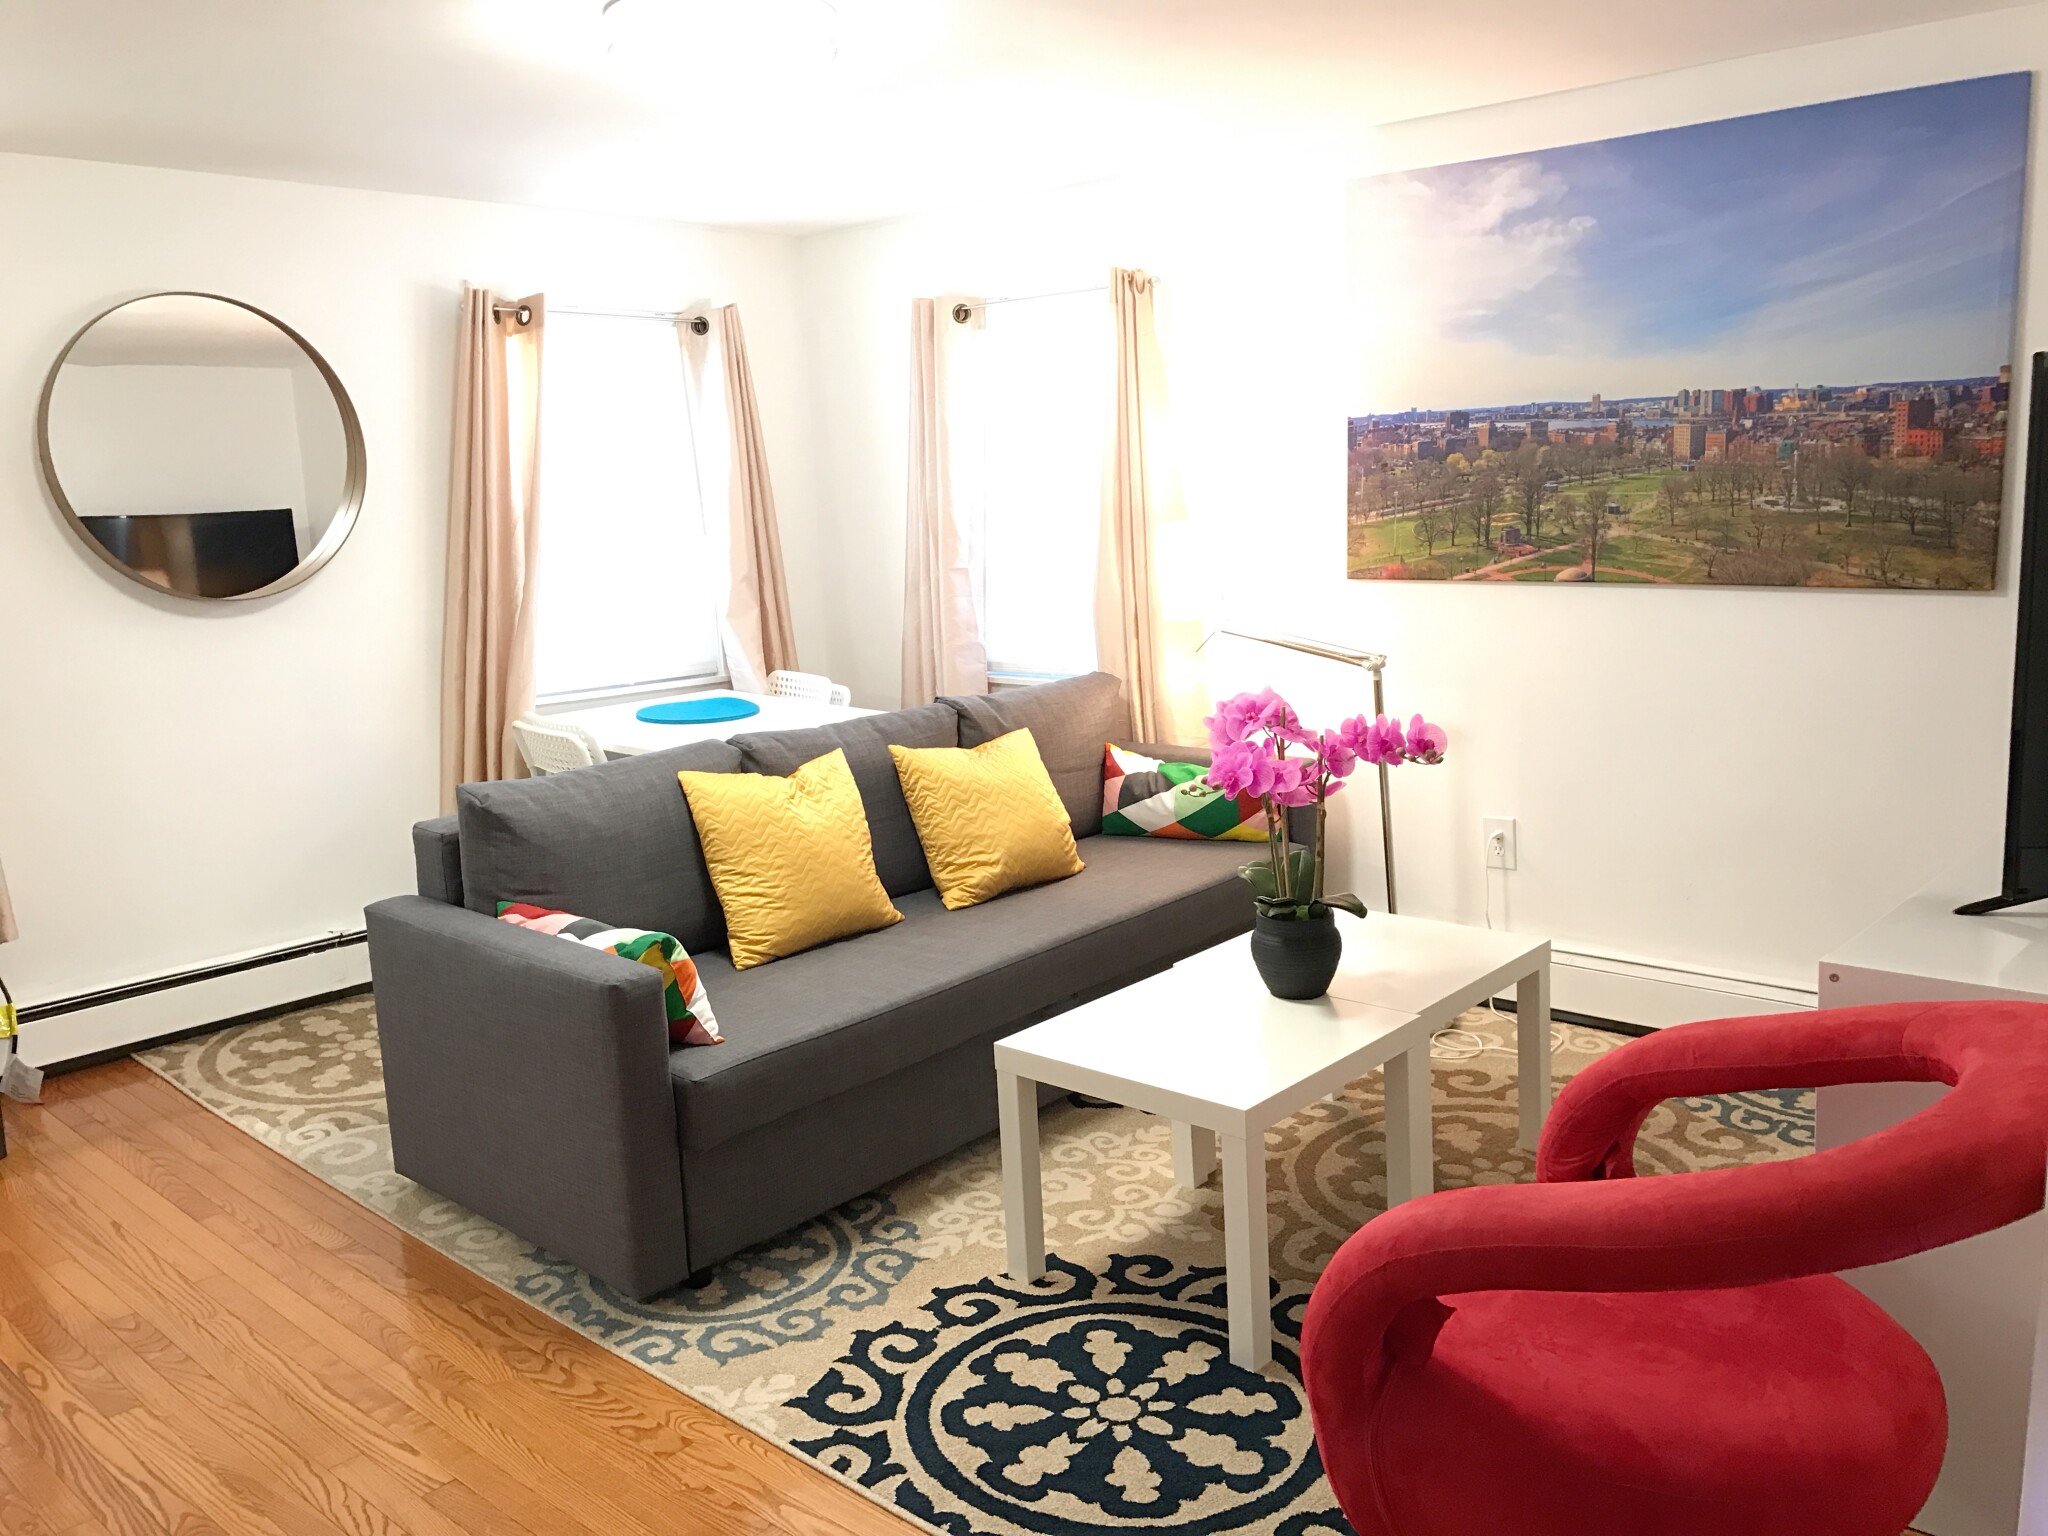 Photos of apartment on Farragut Rd.,Boston MA 02127